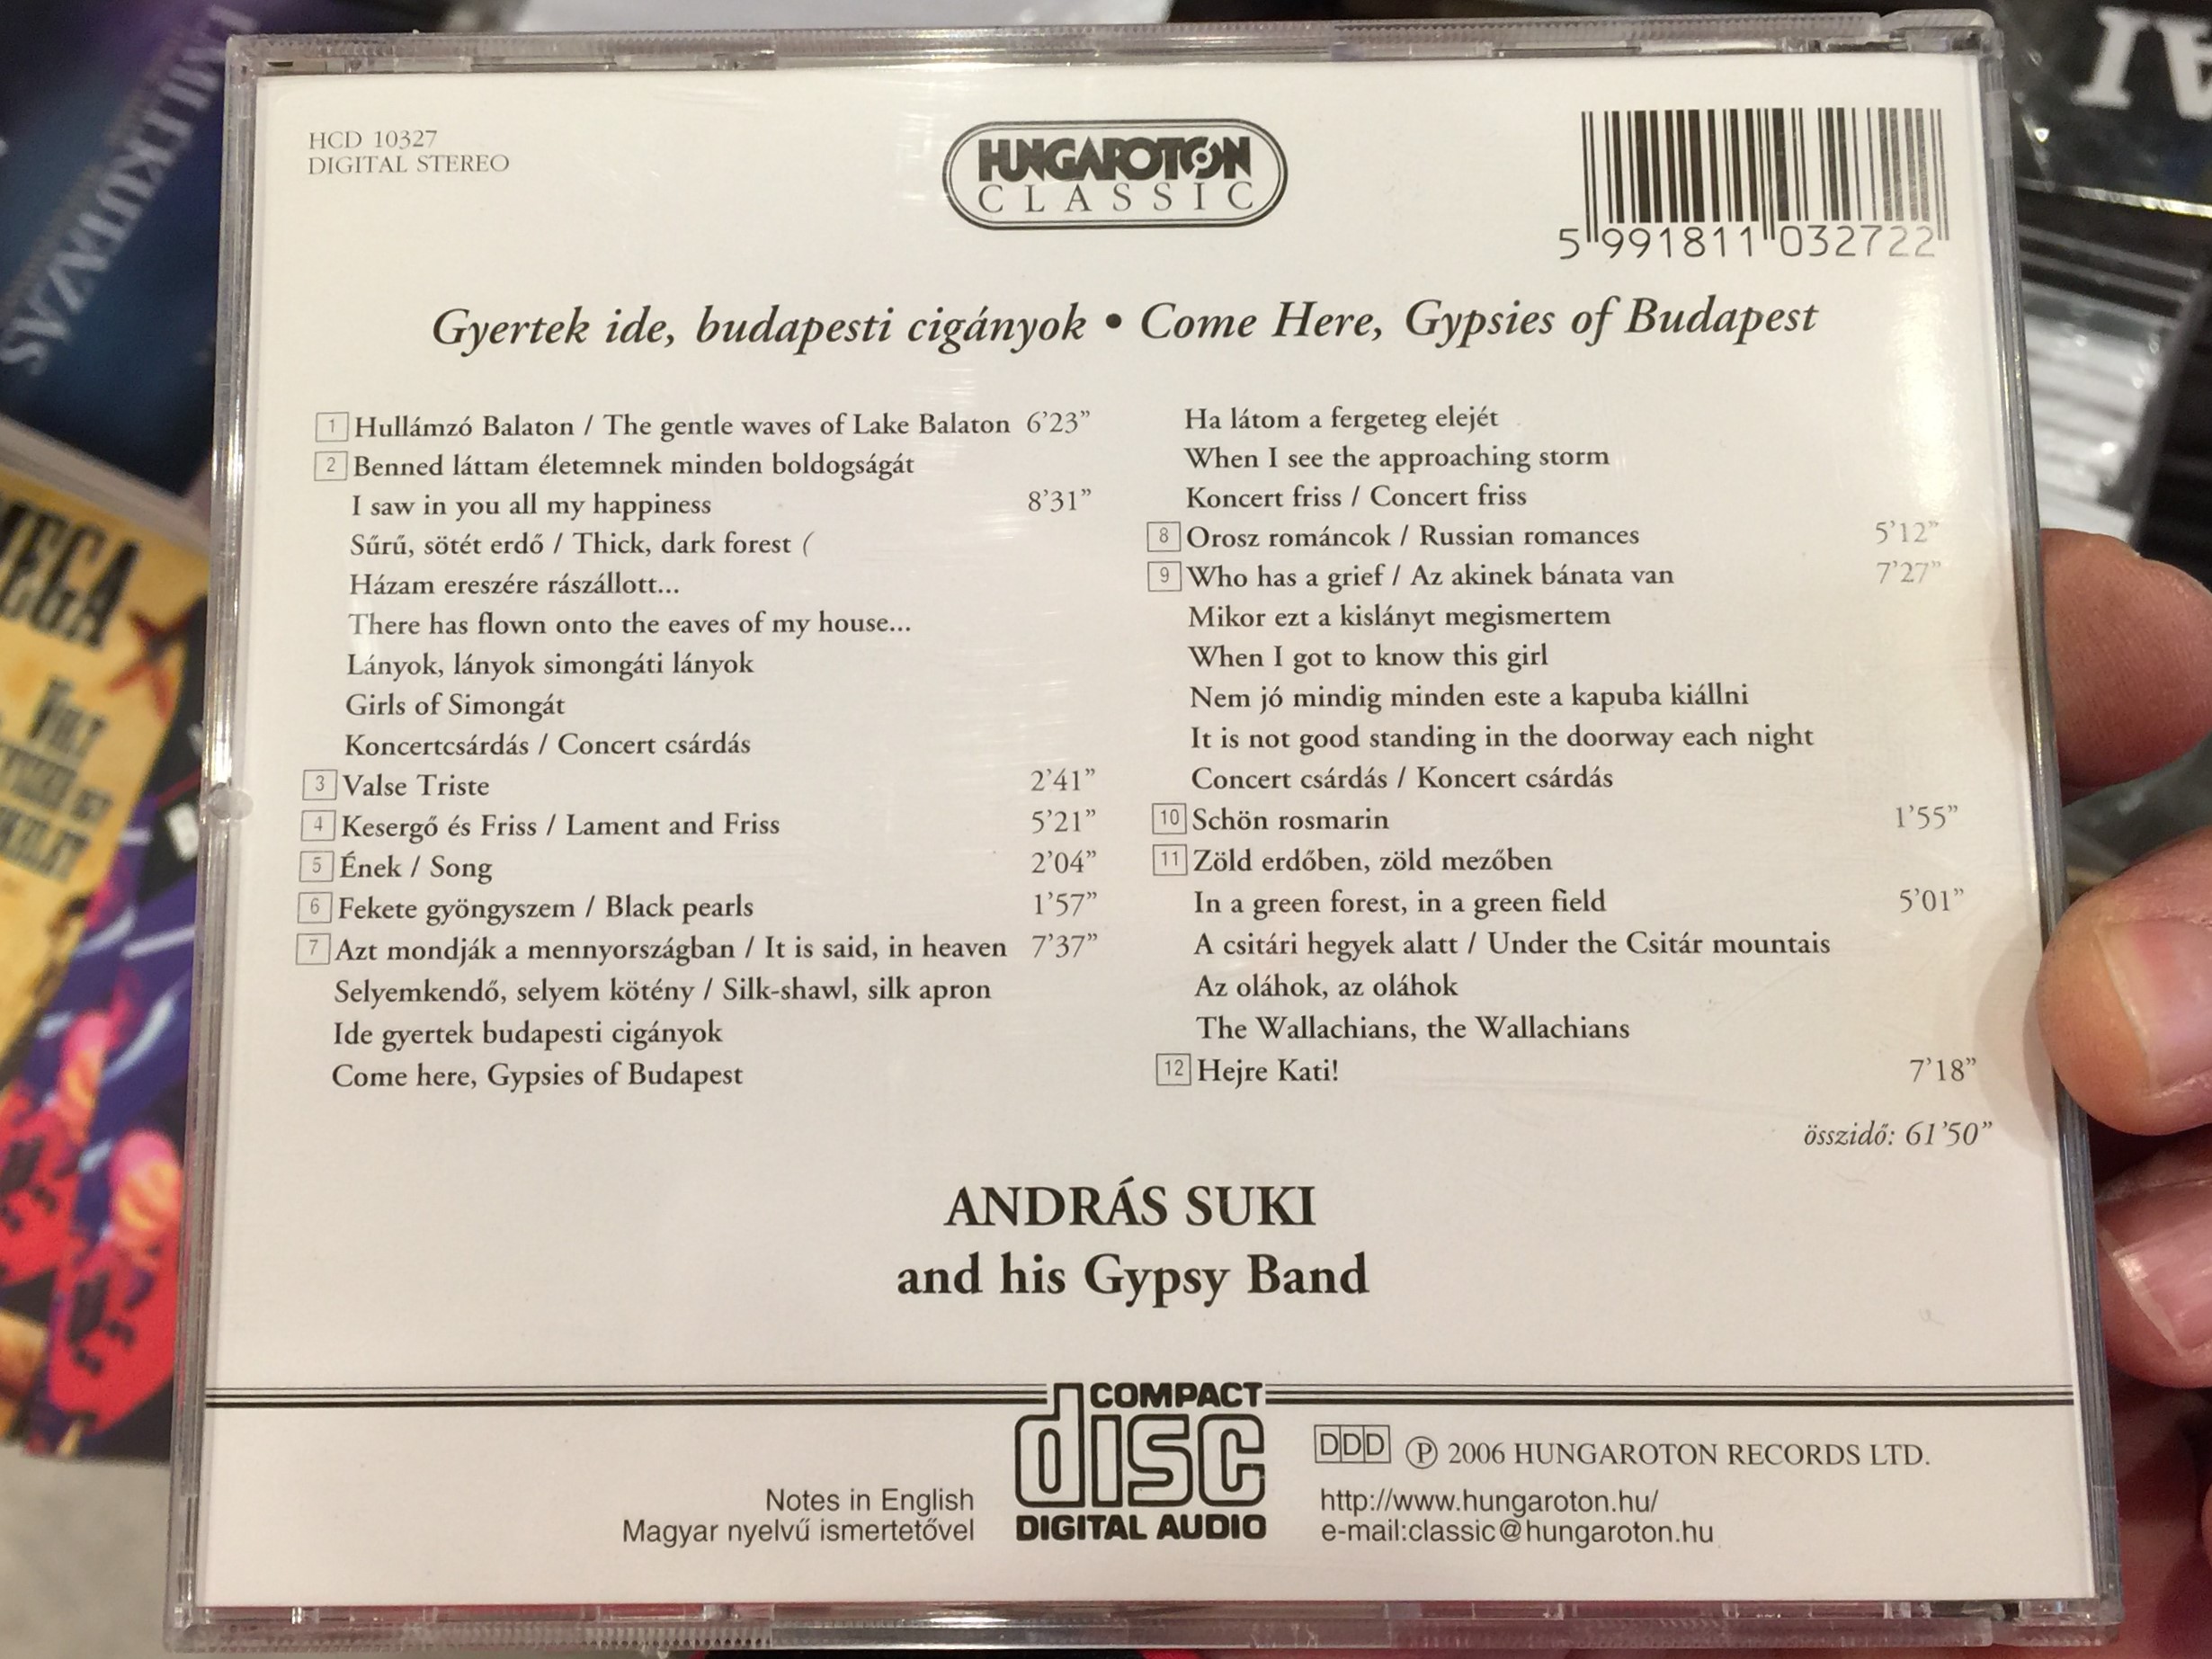 gyertek-ide-budapesti-ciganyok-come-here-gypsies-of-budapest-andras-suki-and-his-gypsy-band-hungaroton-classic-audio-cd-2006-stereo-hcd-10327-2-.jpg